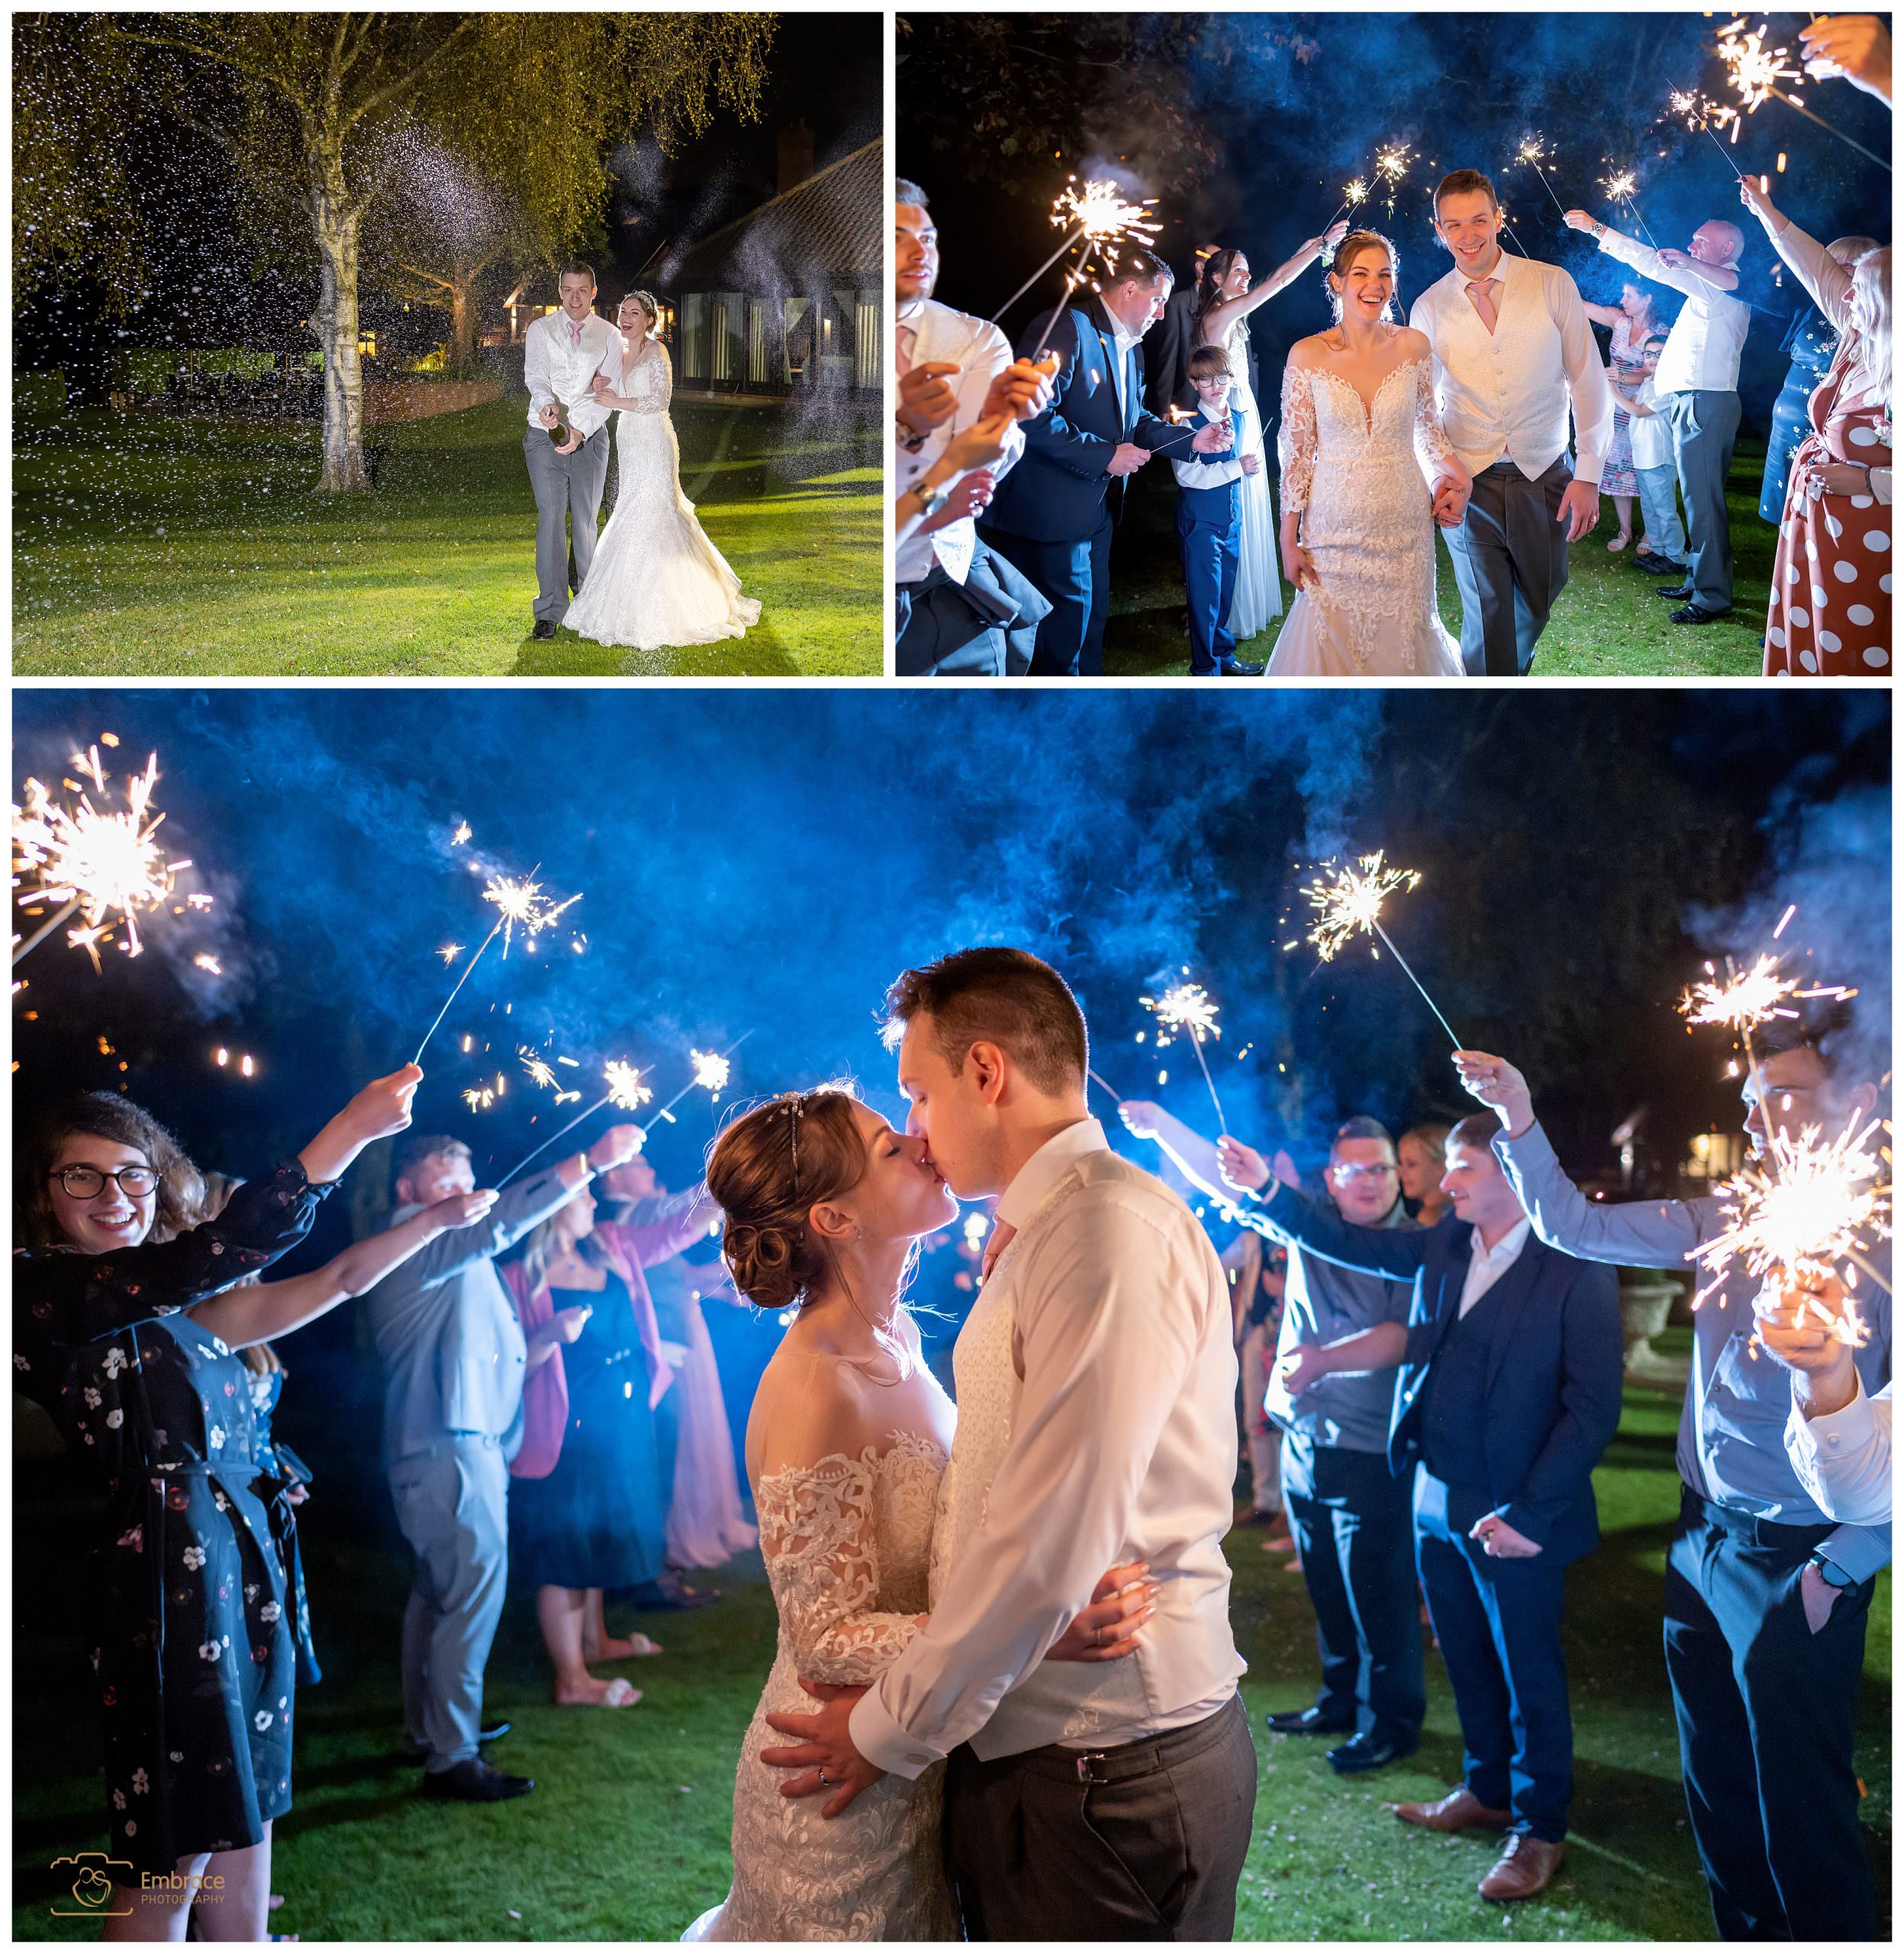 Stunning sparkler exit wedding photograph